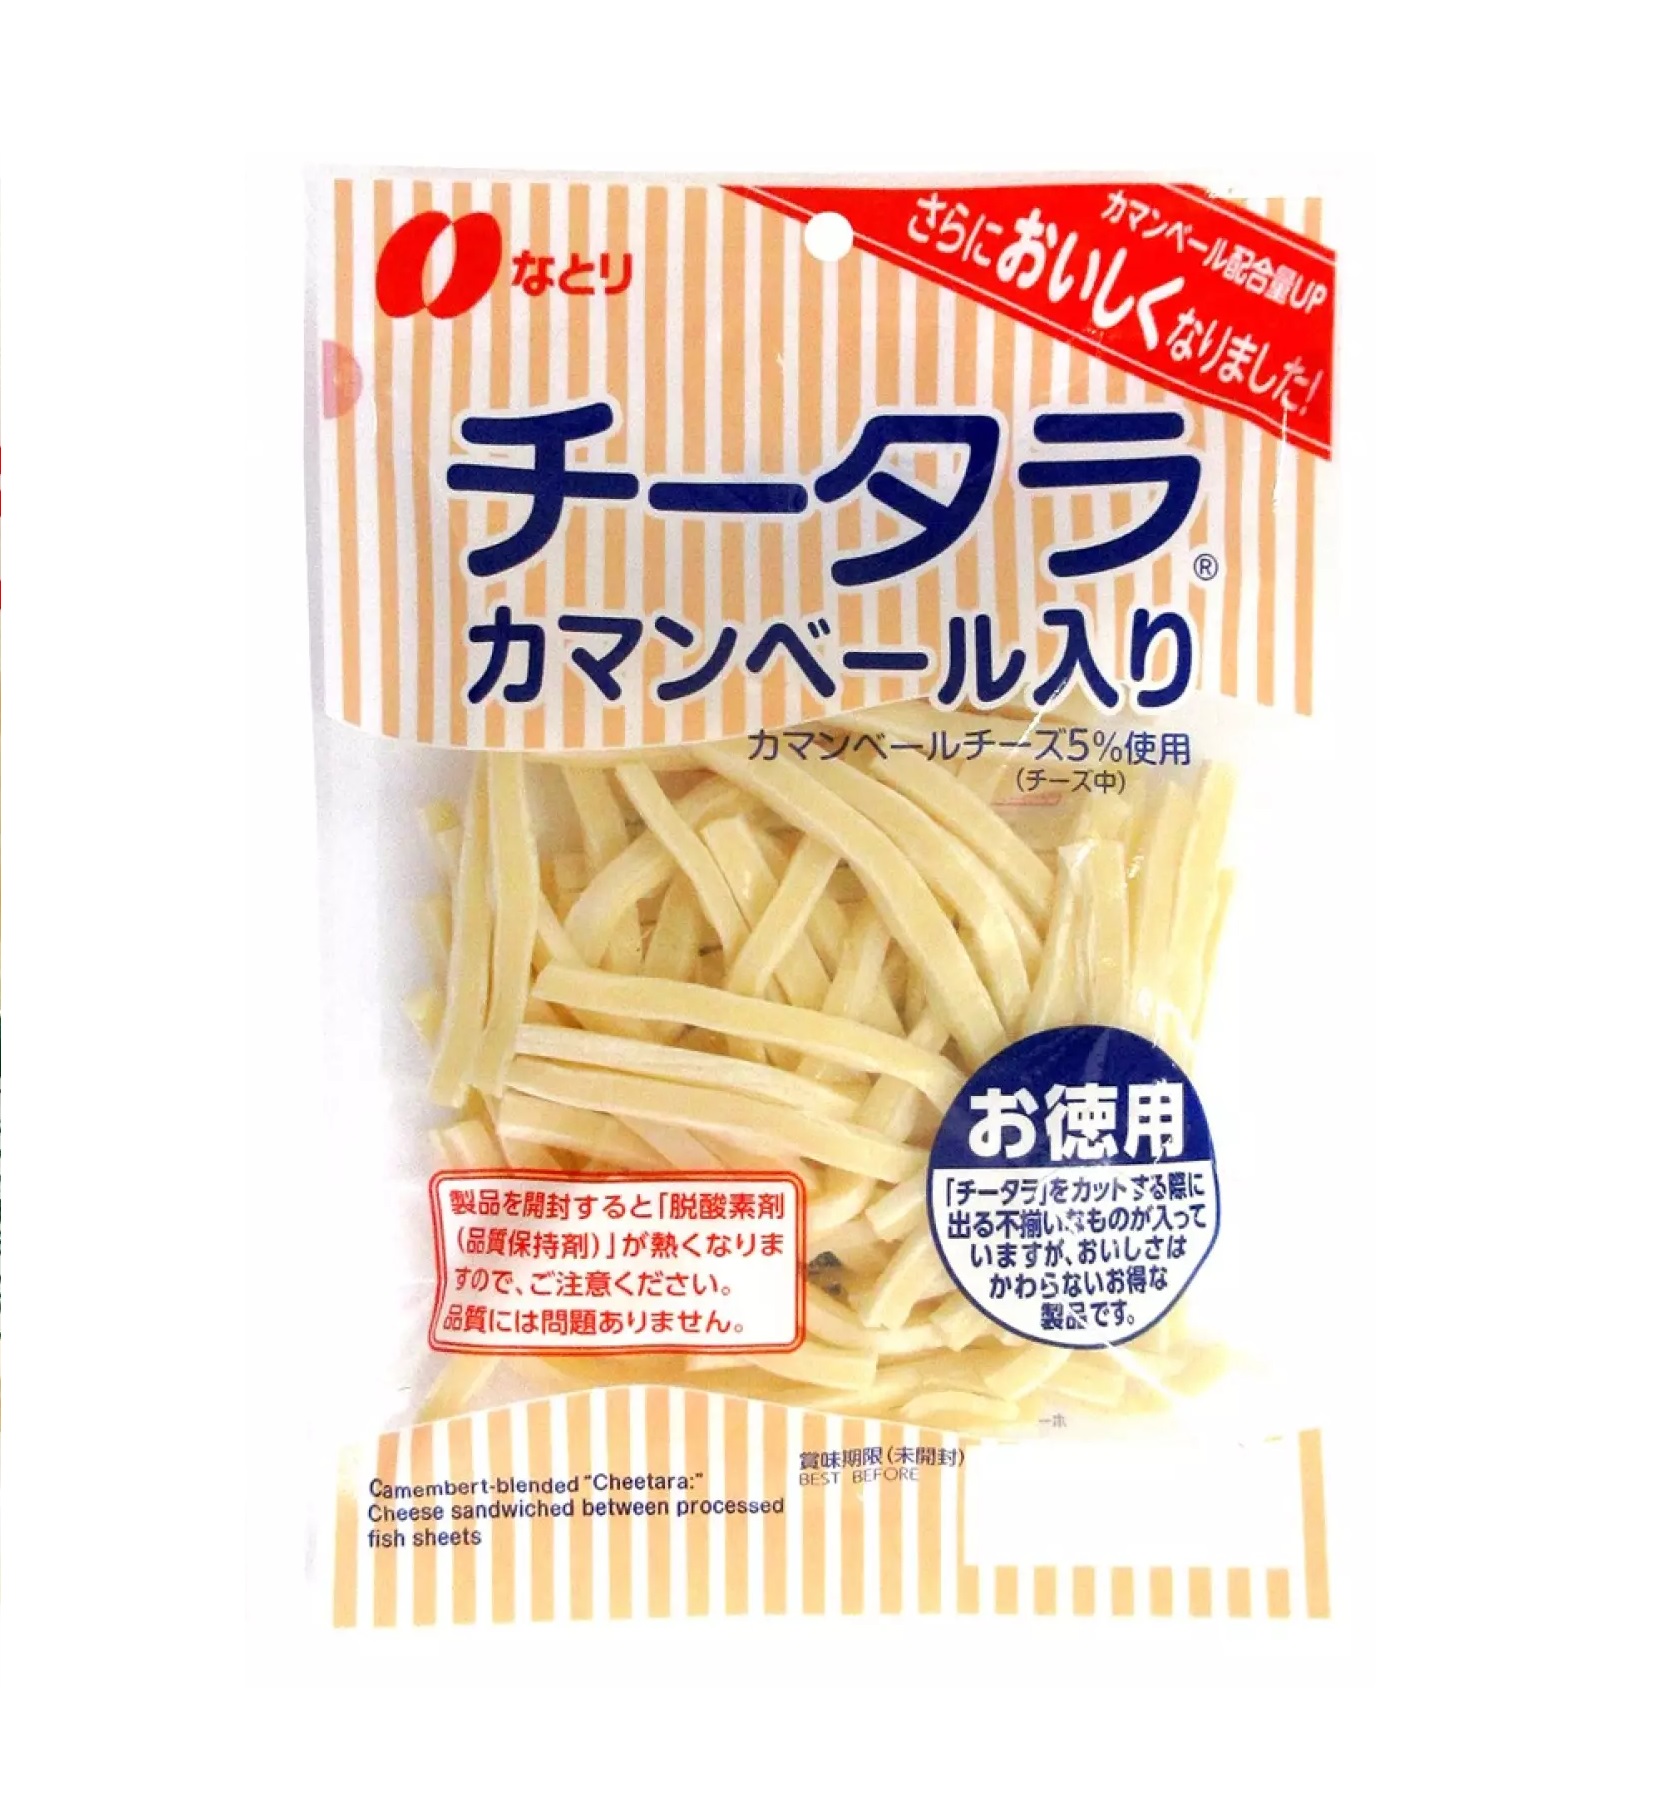 Natori Cheese ทาโร่ชีส ชีสเส้นรมควัน พร้อมทานยอดนิยม นำเข้าจากญี่ปุ่น ทาโร่ชีส ฉลากสีน้ำเงิน (139กรัม) EXP08.2021